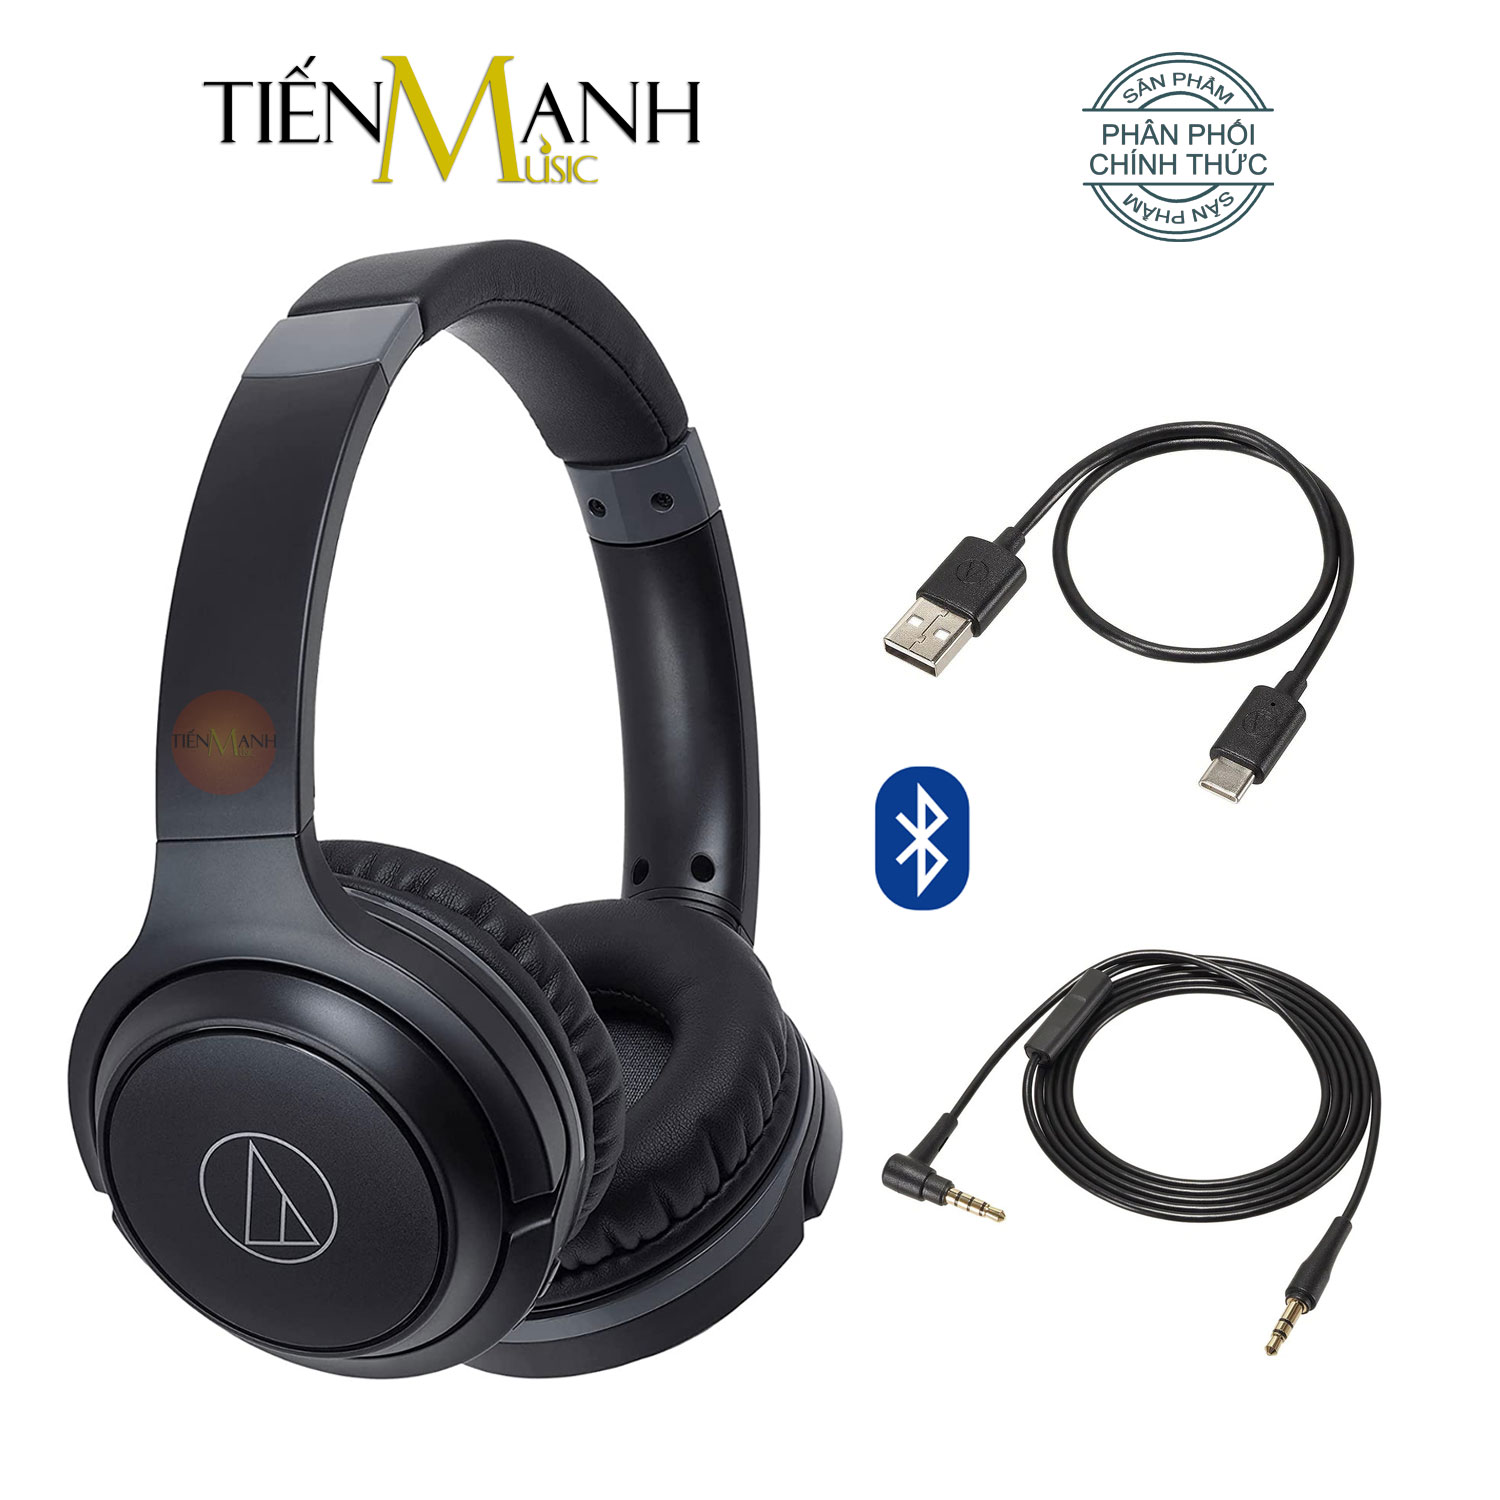 Genuine, Bluetooth Audio Technica ath-s220bt wireless headset wireless